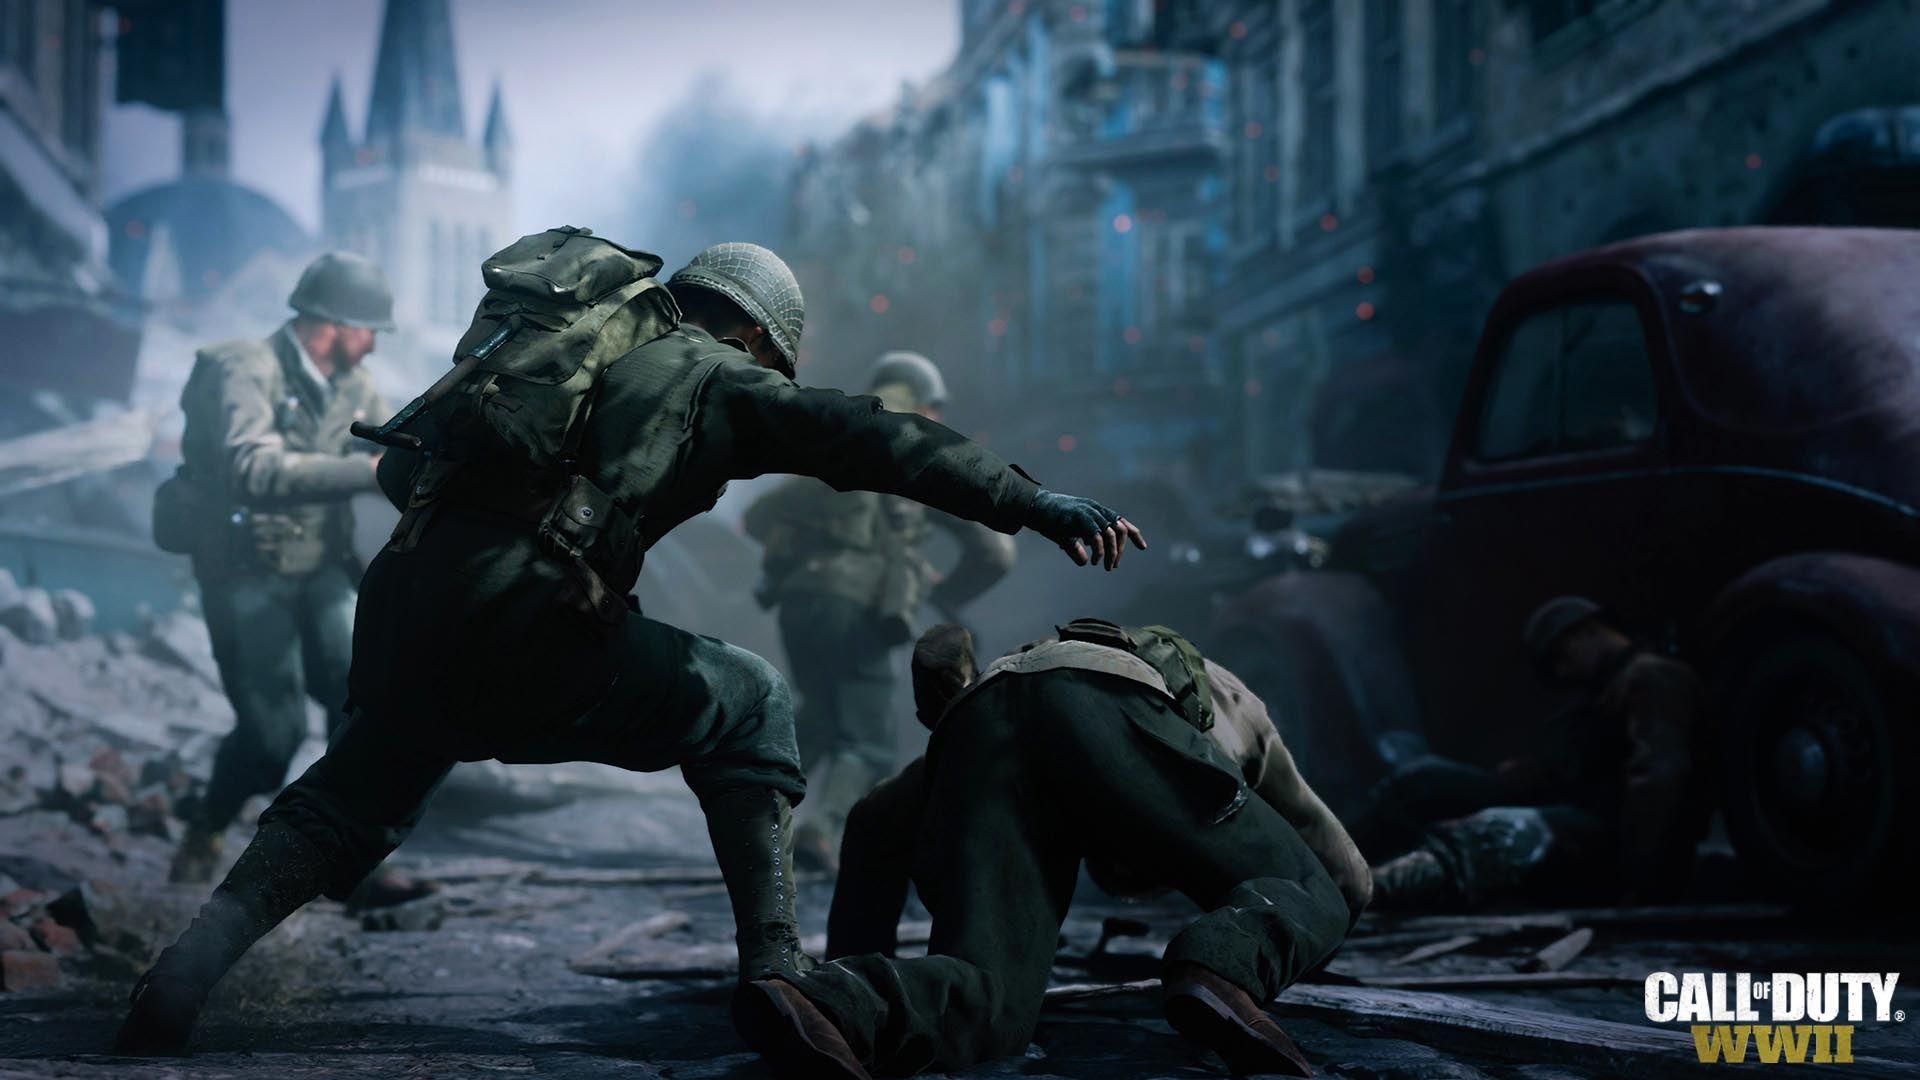 Call Of Duty: WWII Wallpaper HD 16 9